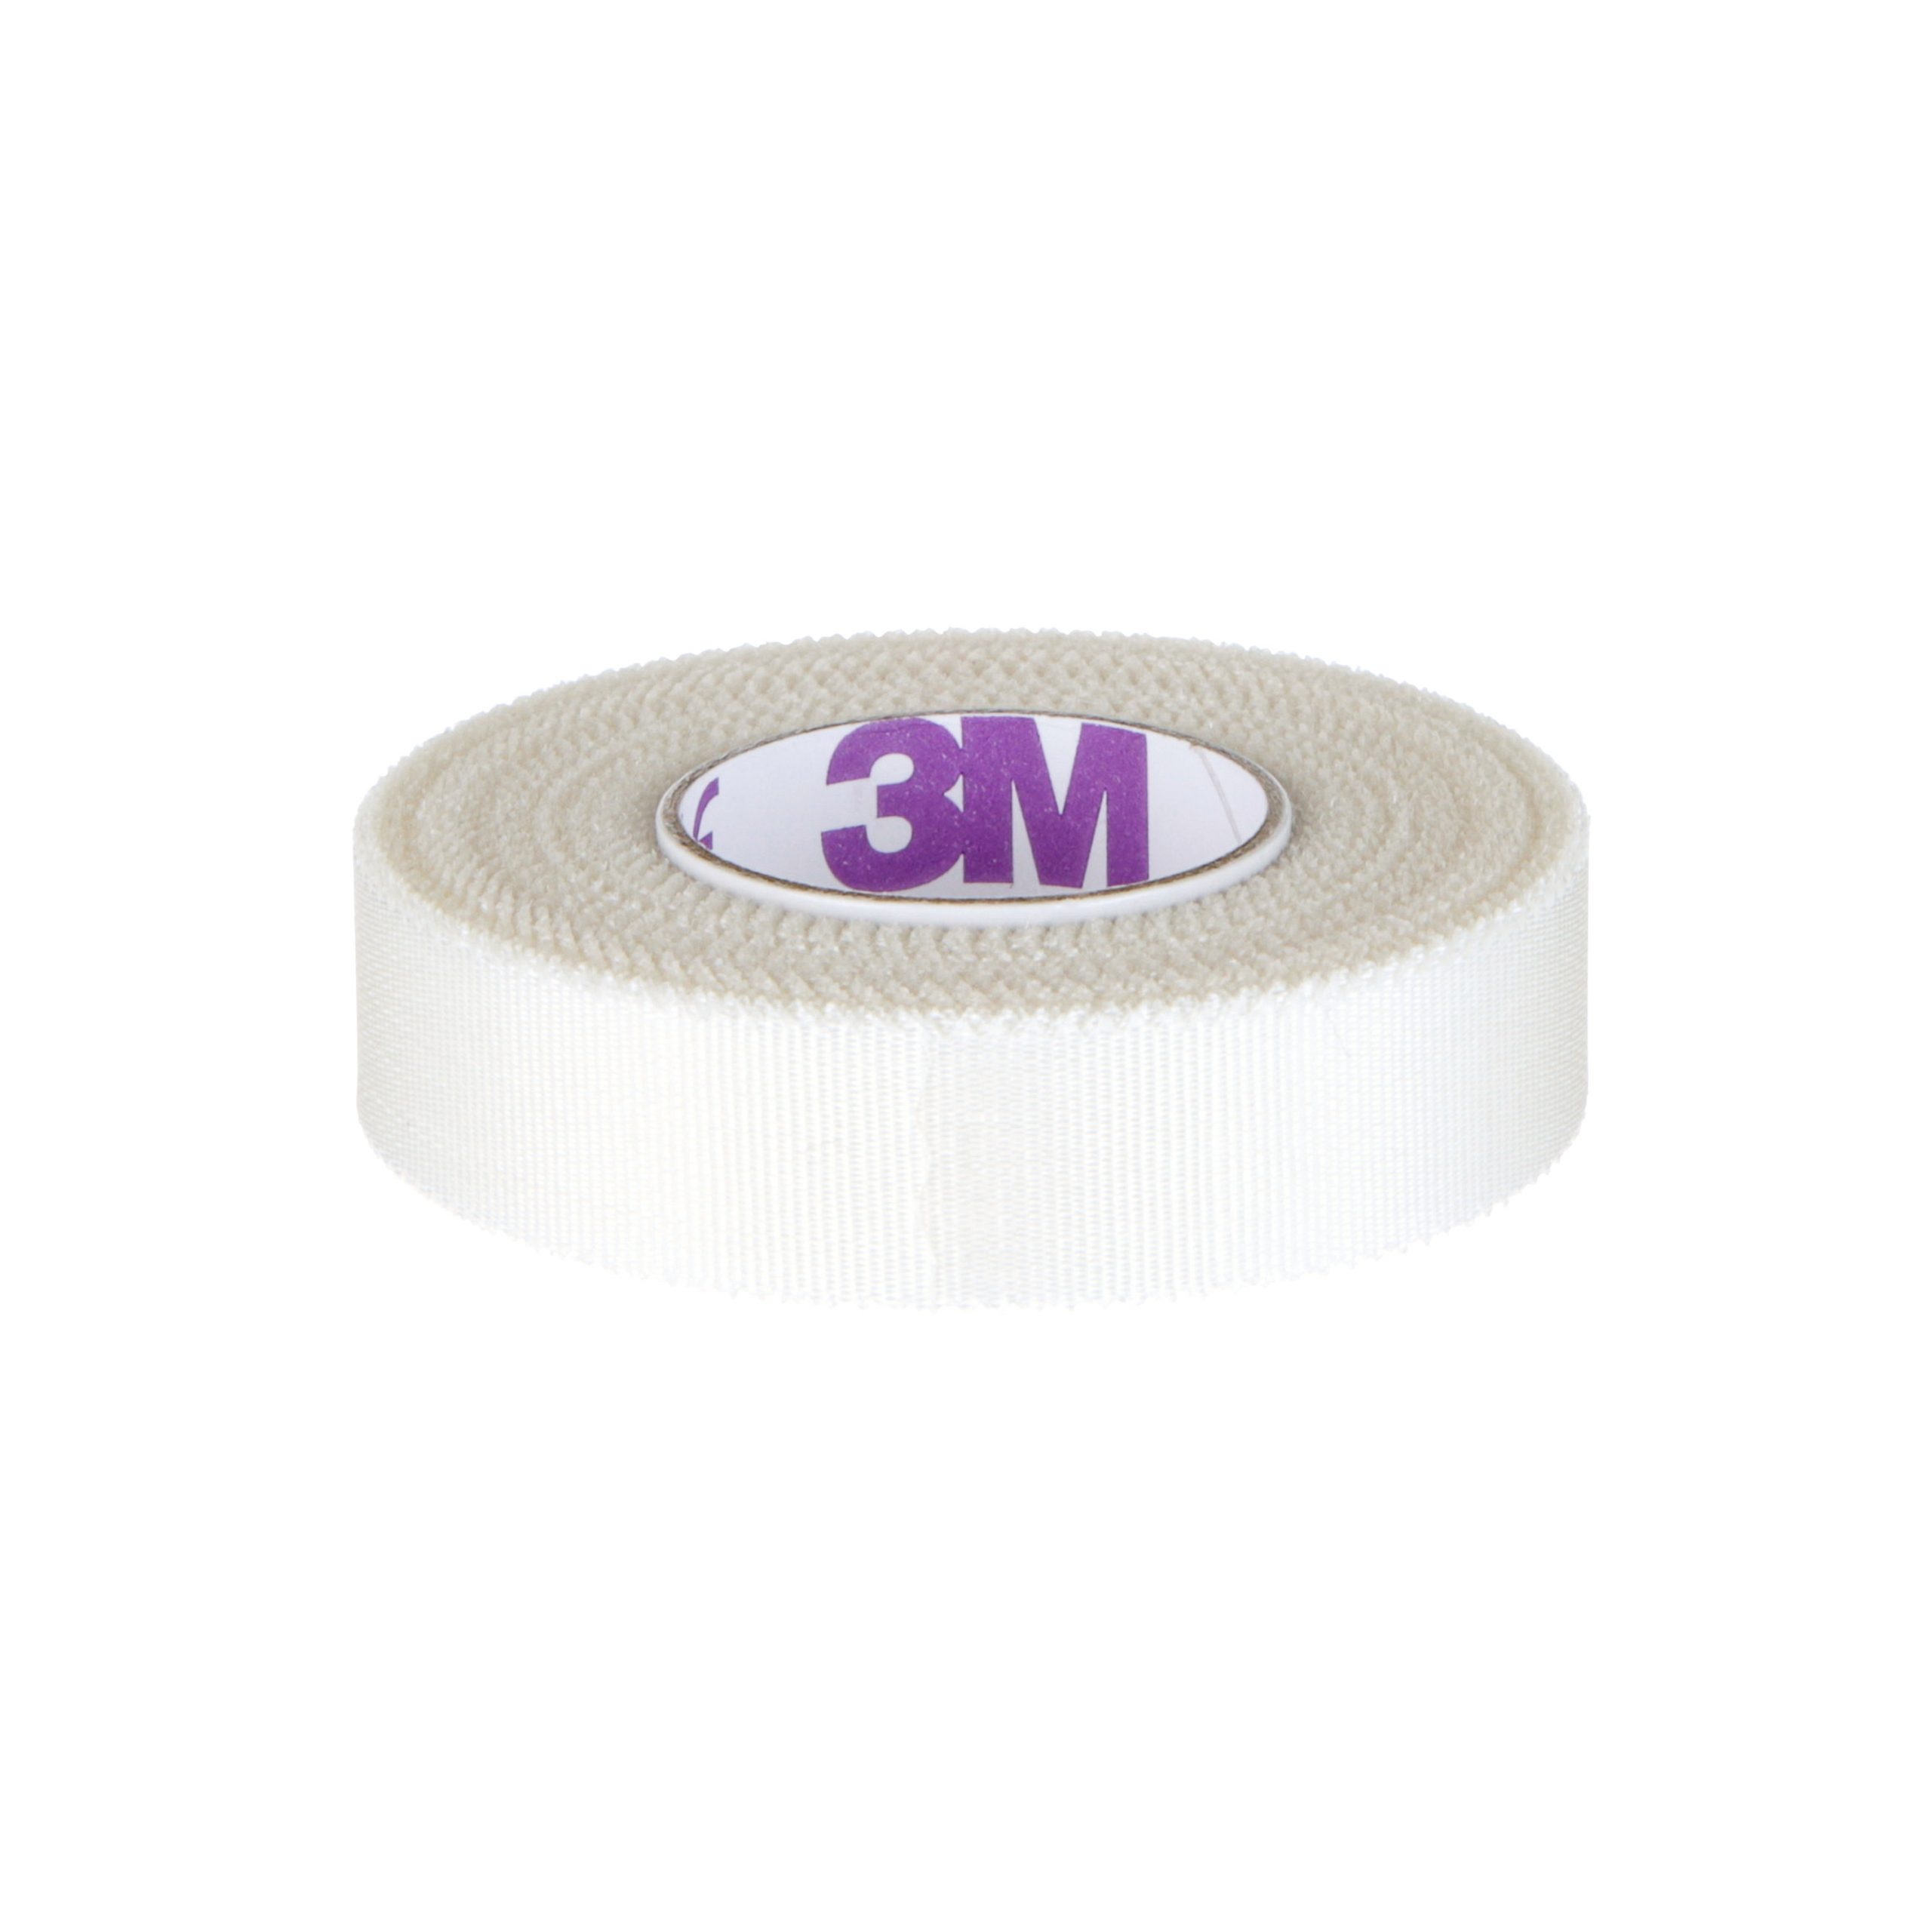 3M™ Durapore™ Surgical Tape